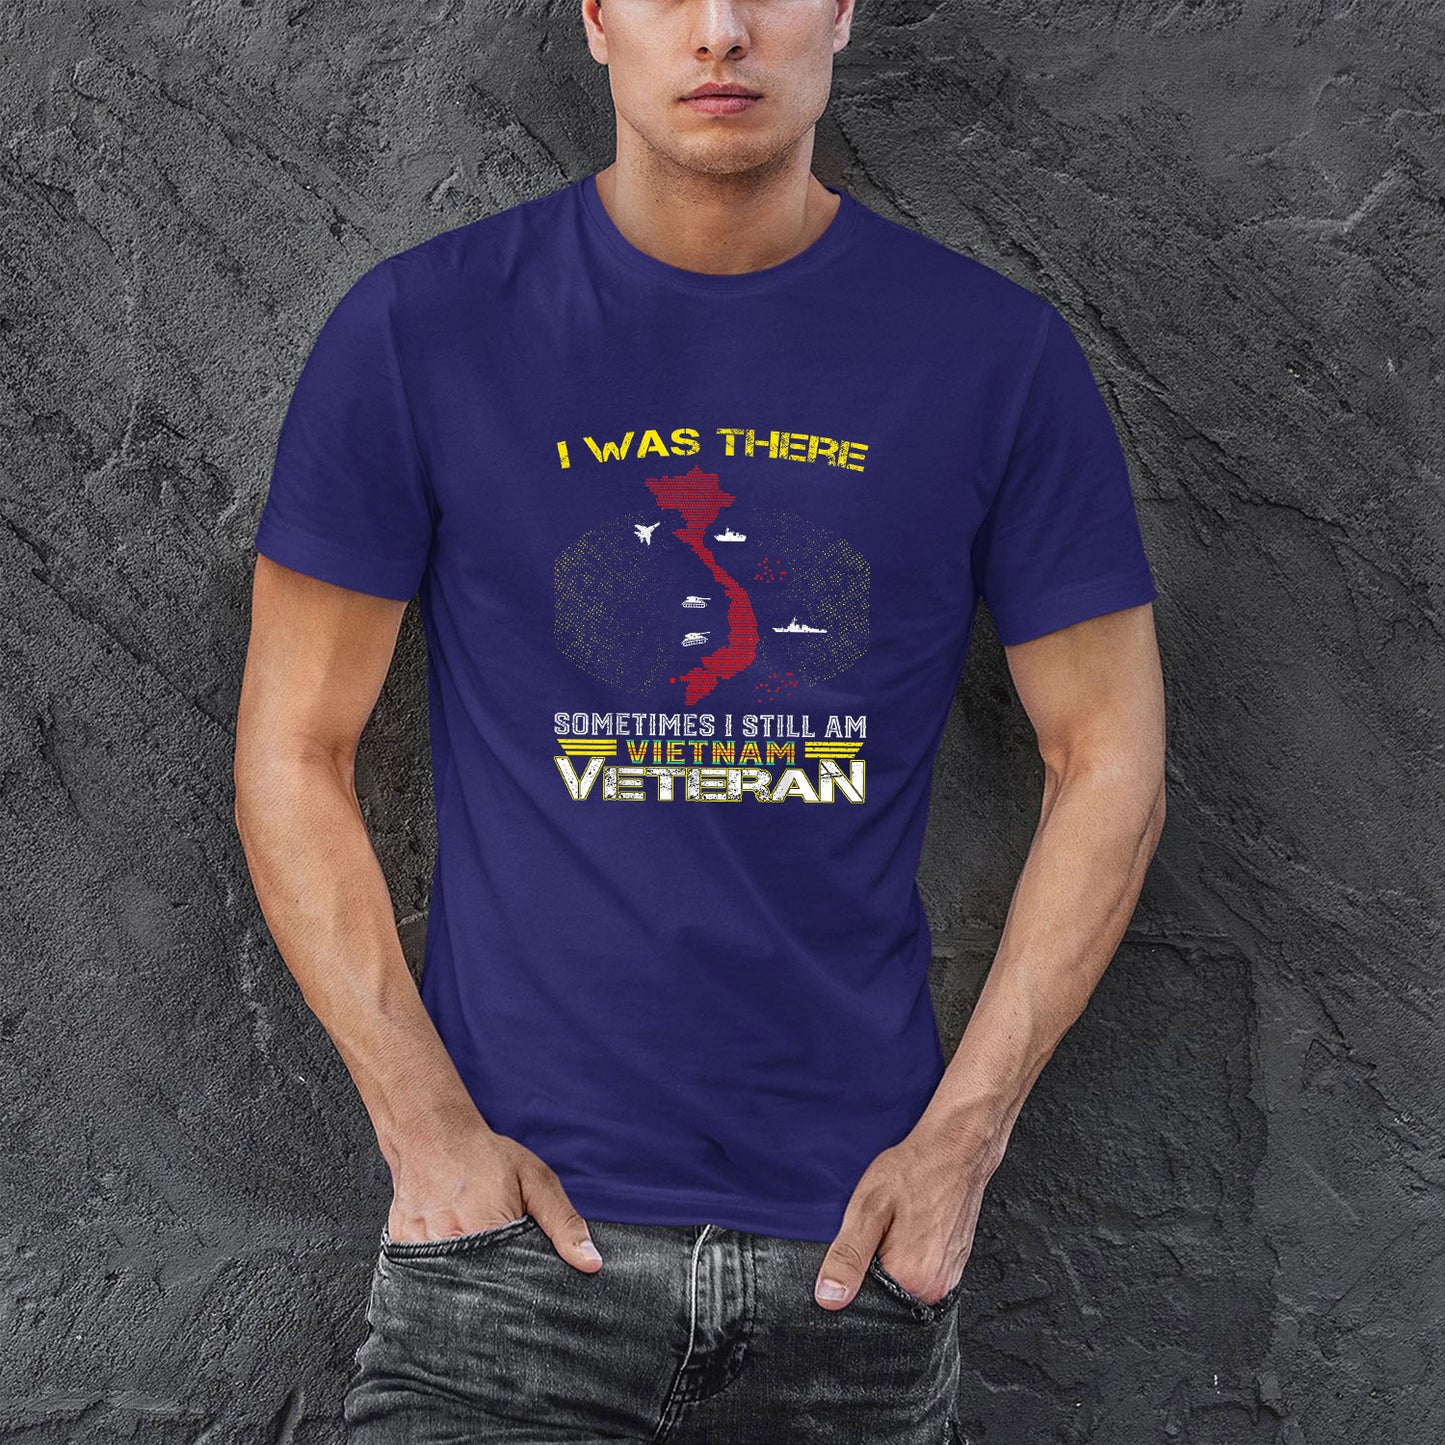 Memorial Day 2021 Vietnam Veteran T Shirts, I WAS THERE SOMETIMES I STILL AM VIETNAM VETERAN T shirt For Men, Cotton Shirt, Air Force Memorial Shirt, Usaf T Shirt